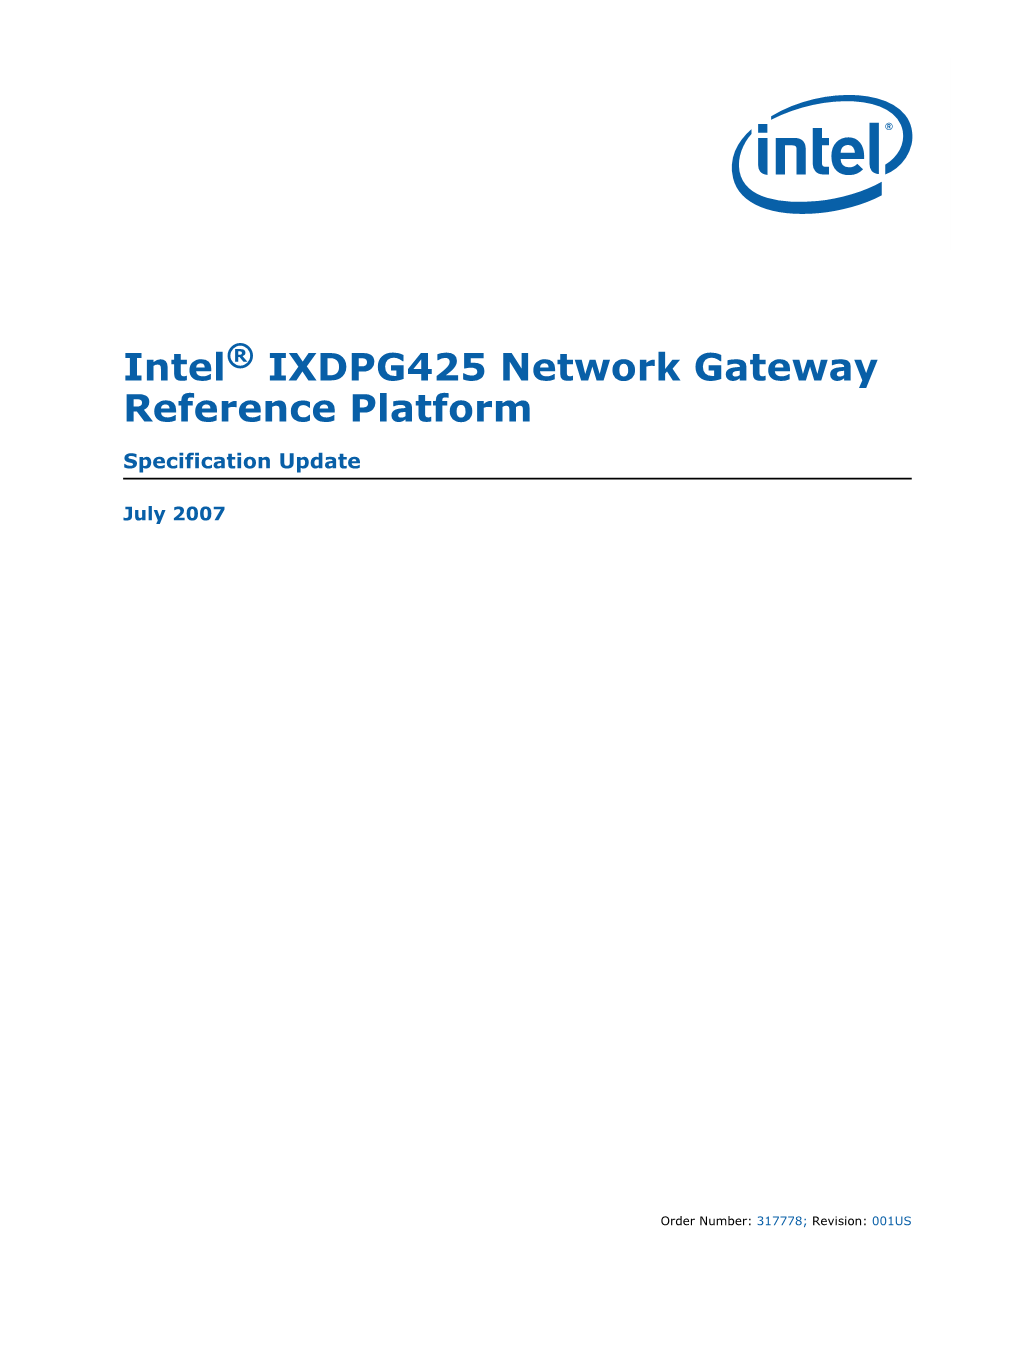 Intel® IXDPG425 Network Gateway Reference Platform Specification